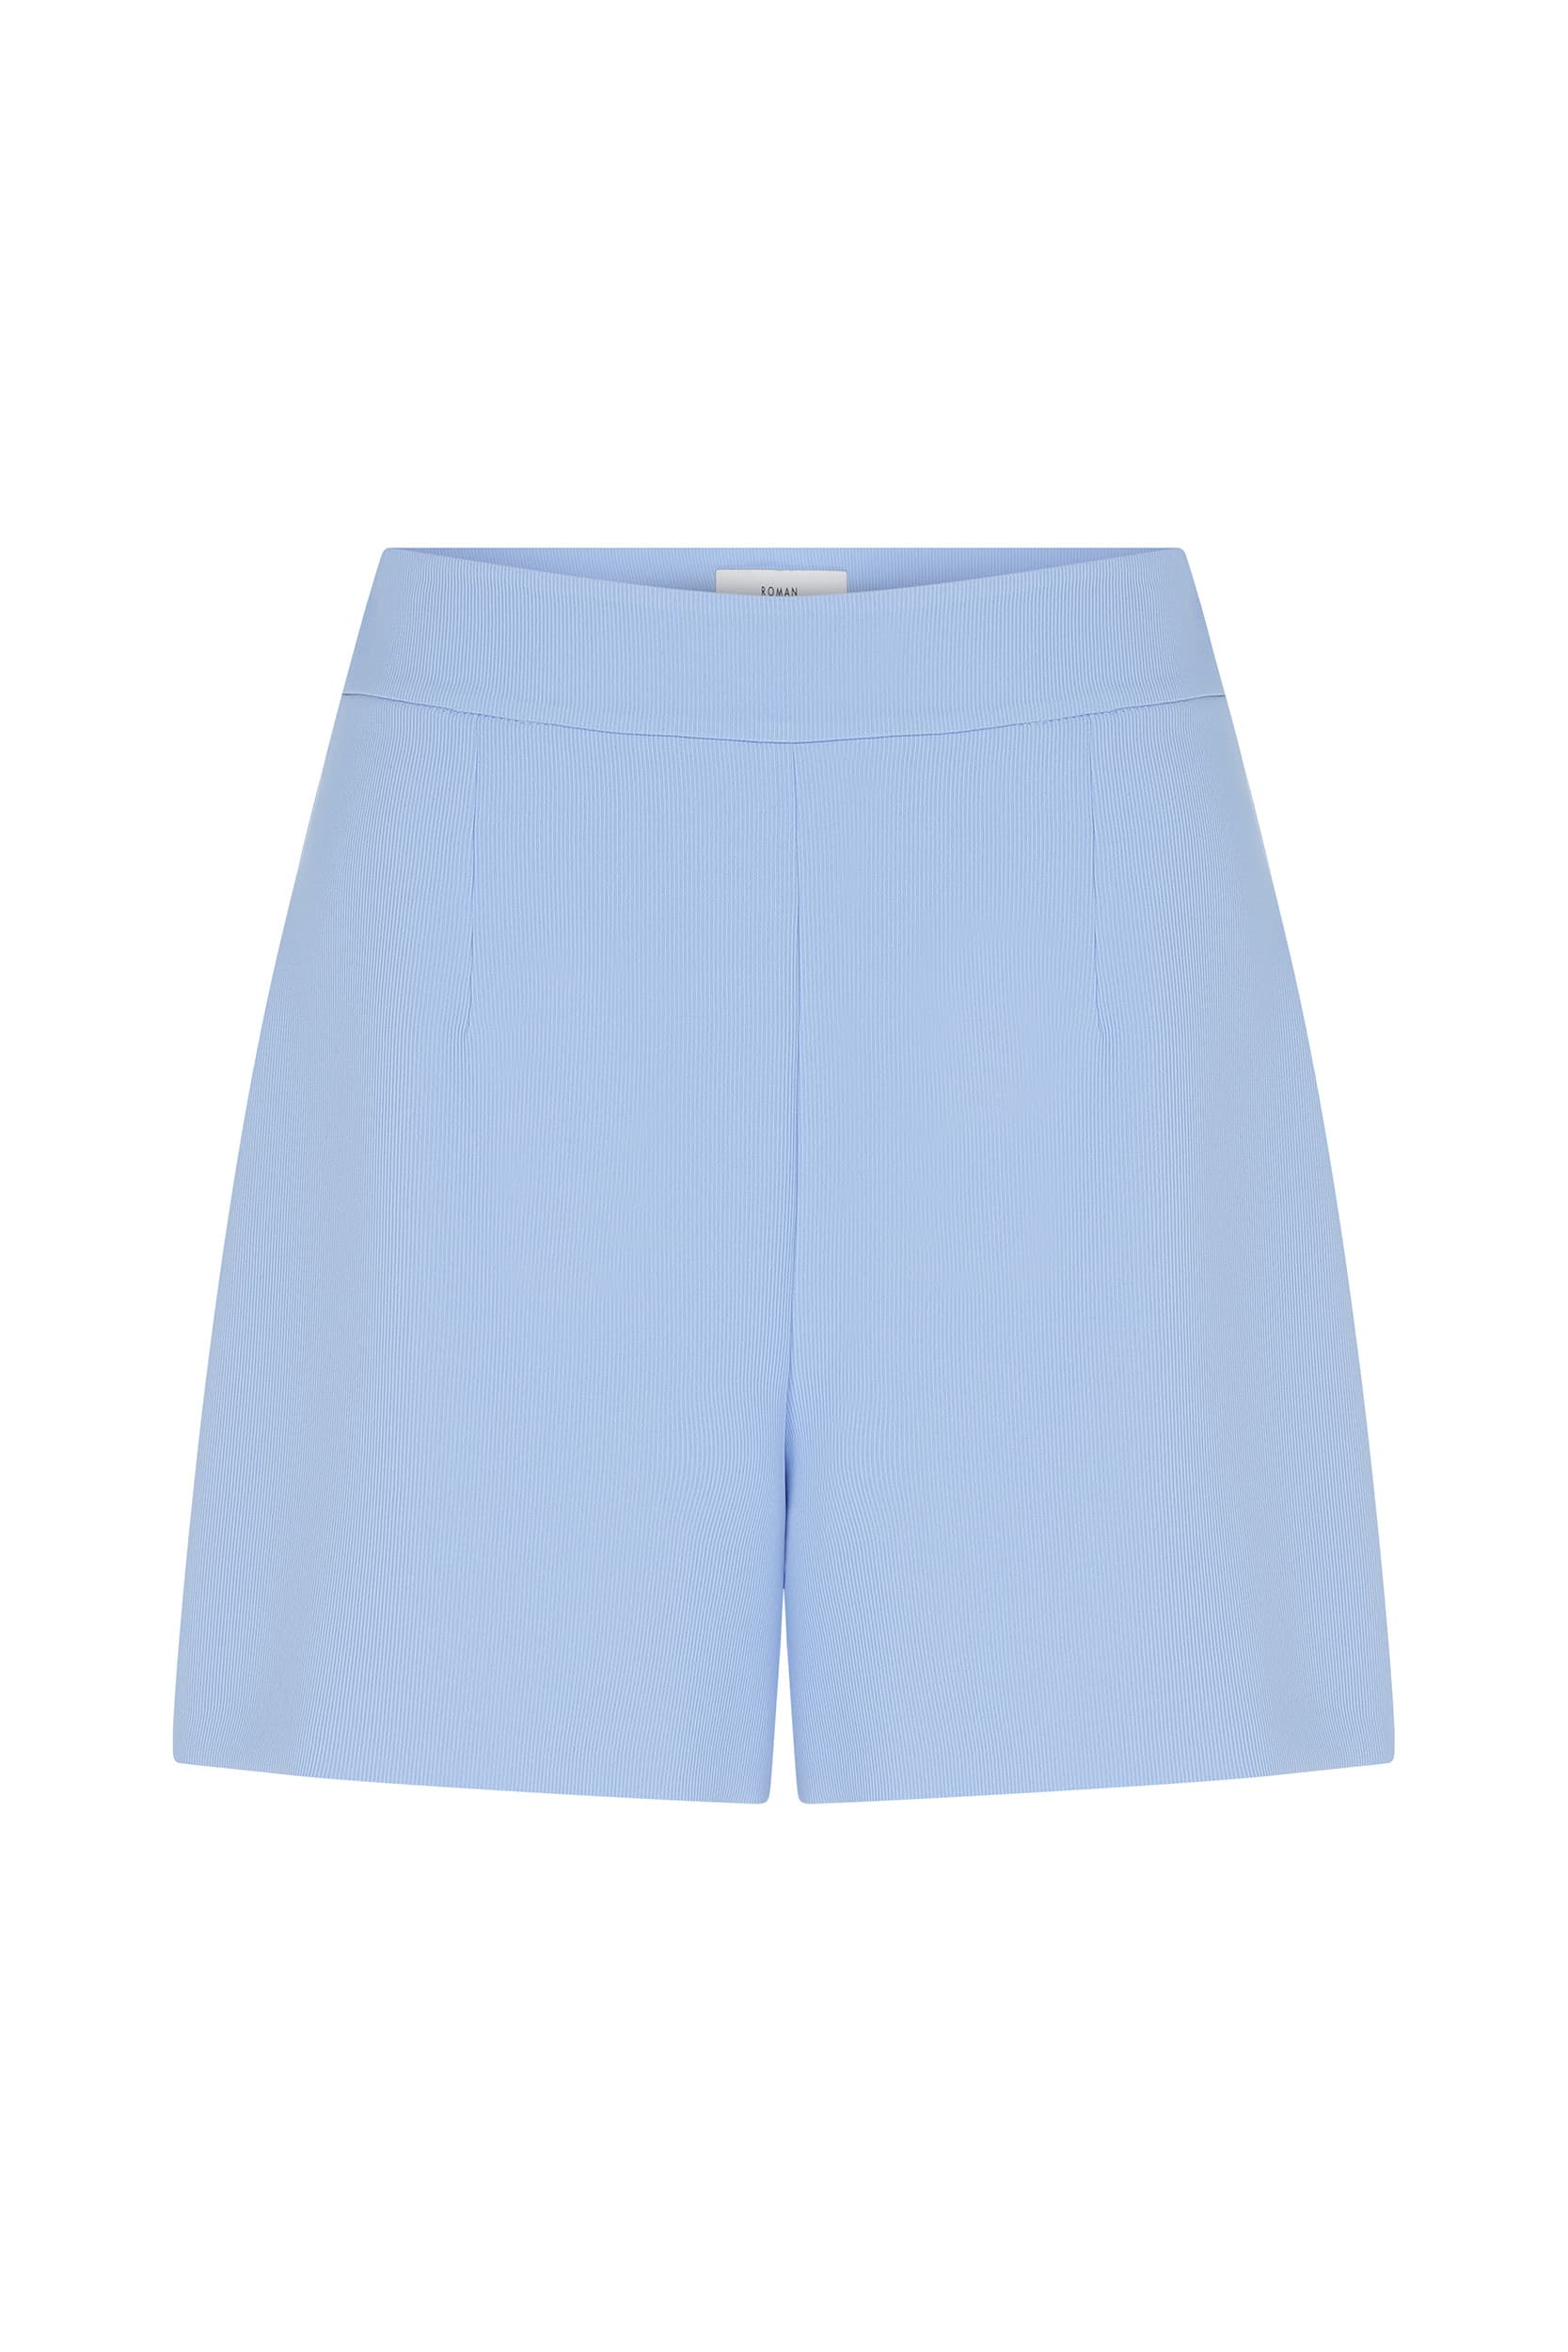  High Waisted Shorts --- [BLUE]